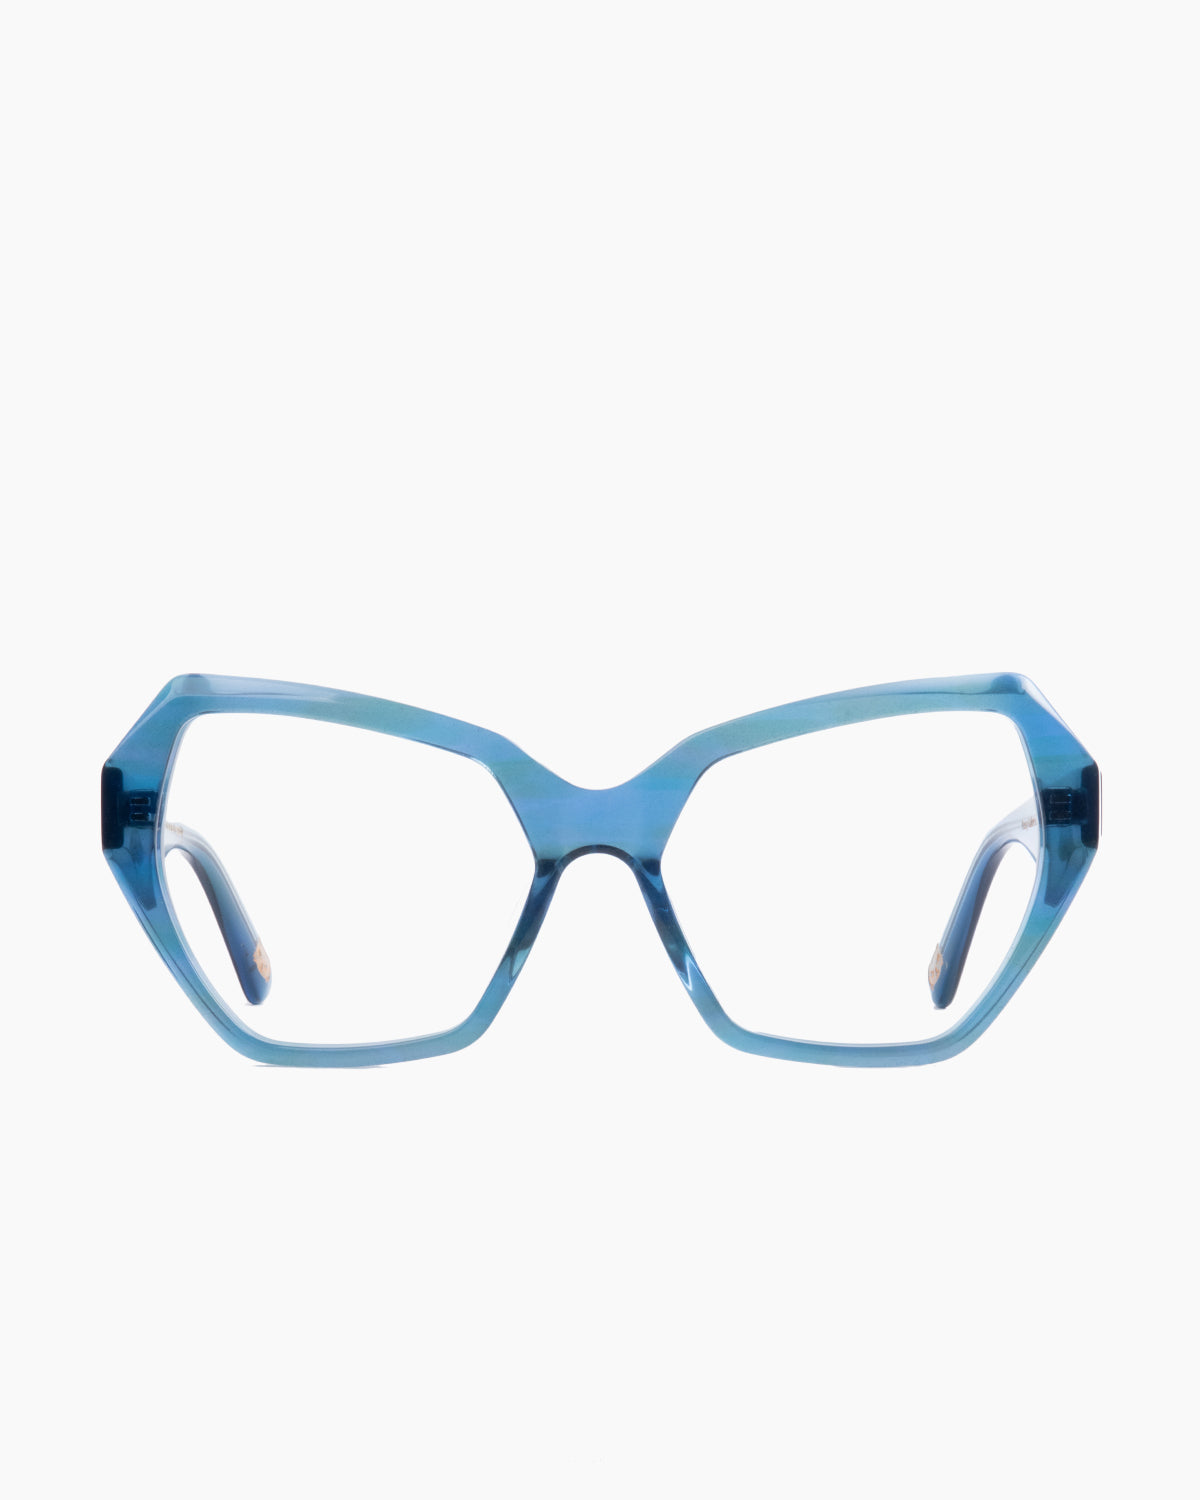 Spectacleeyeworks - Wendy - c456 | glasses bar:  Marie-Sophie Dion